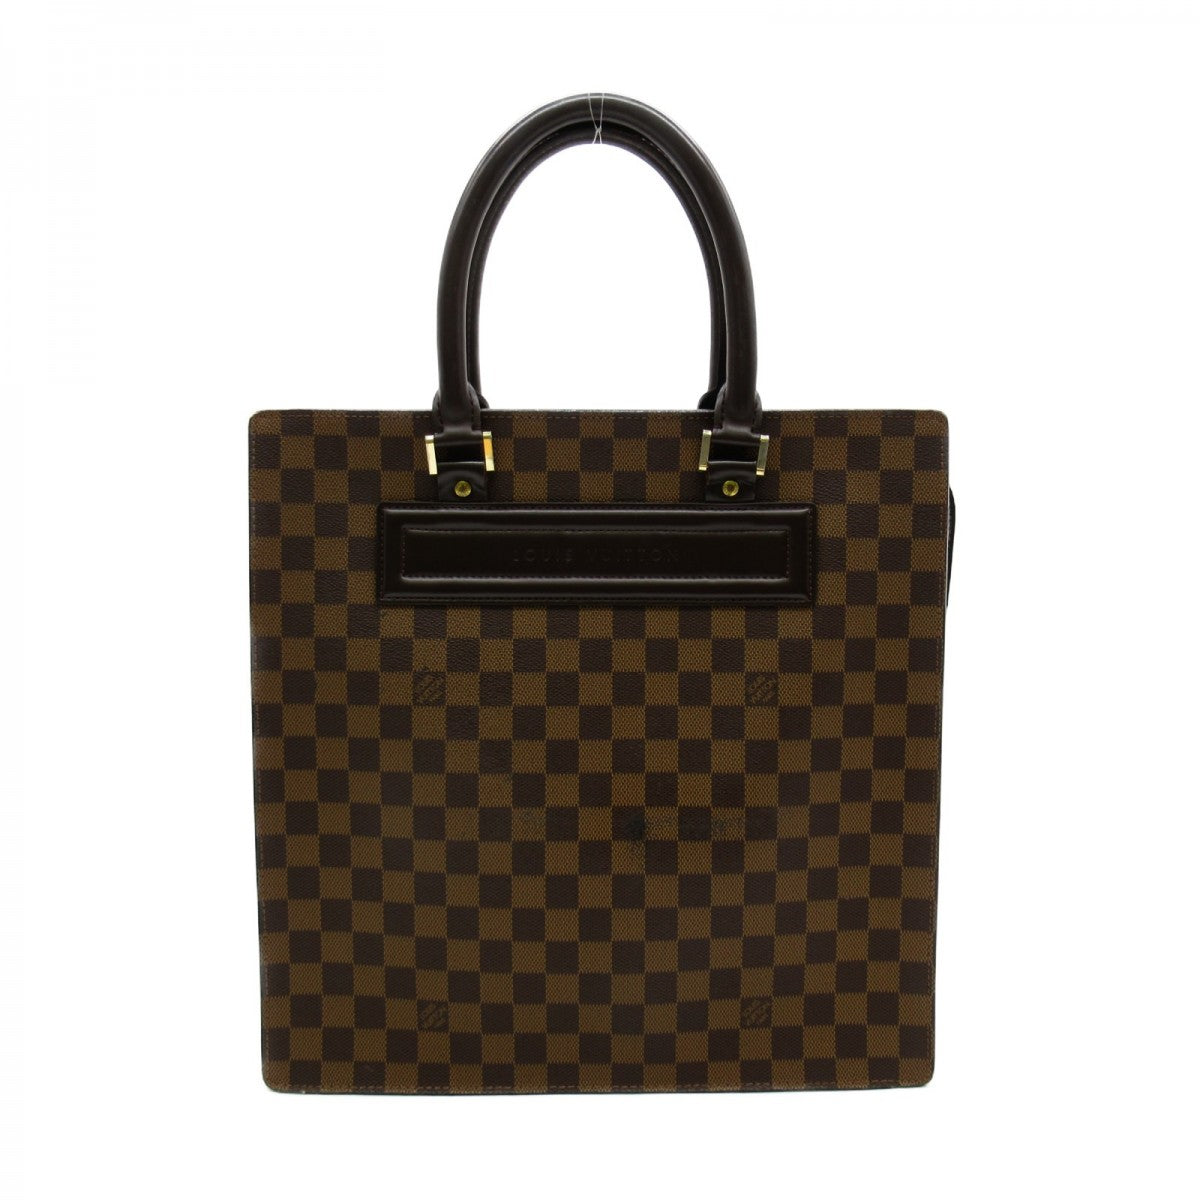 Louis Vuitton Damier Ebene Venice Sac Plat GM Canvas Tote Bag N51146 in Excellent condition